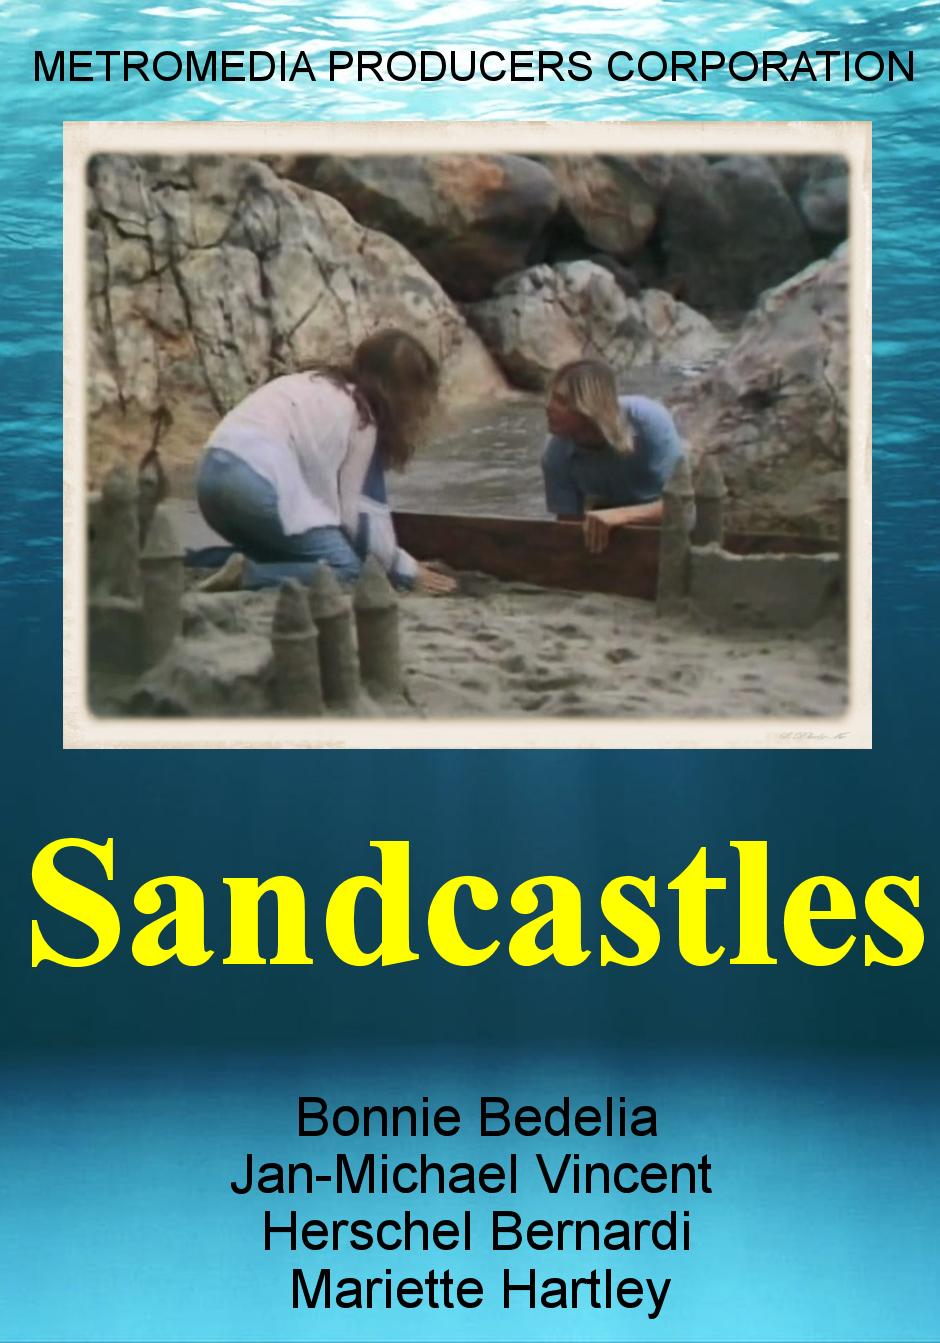 Sandcastles (1972) Screenshot 3 